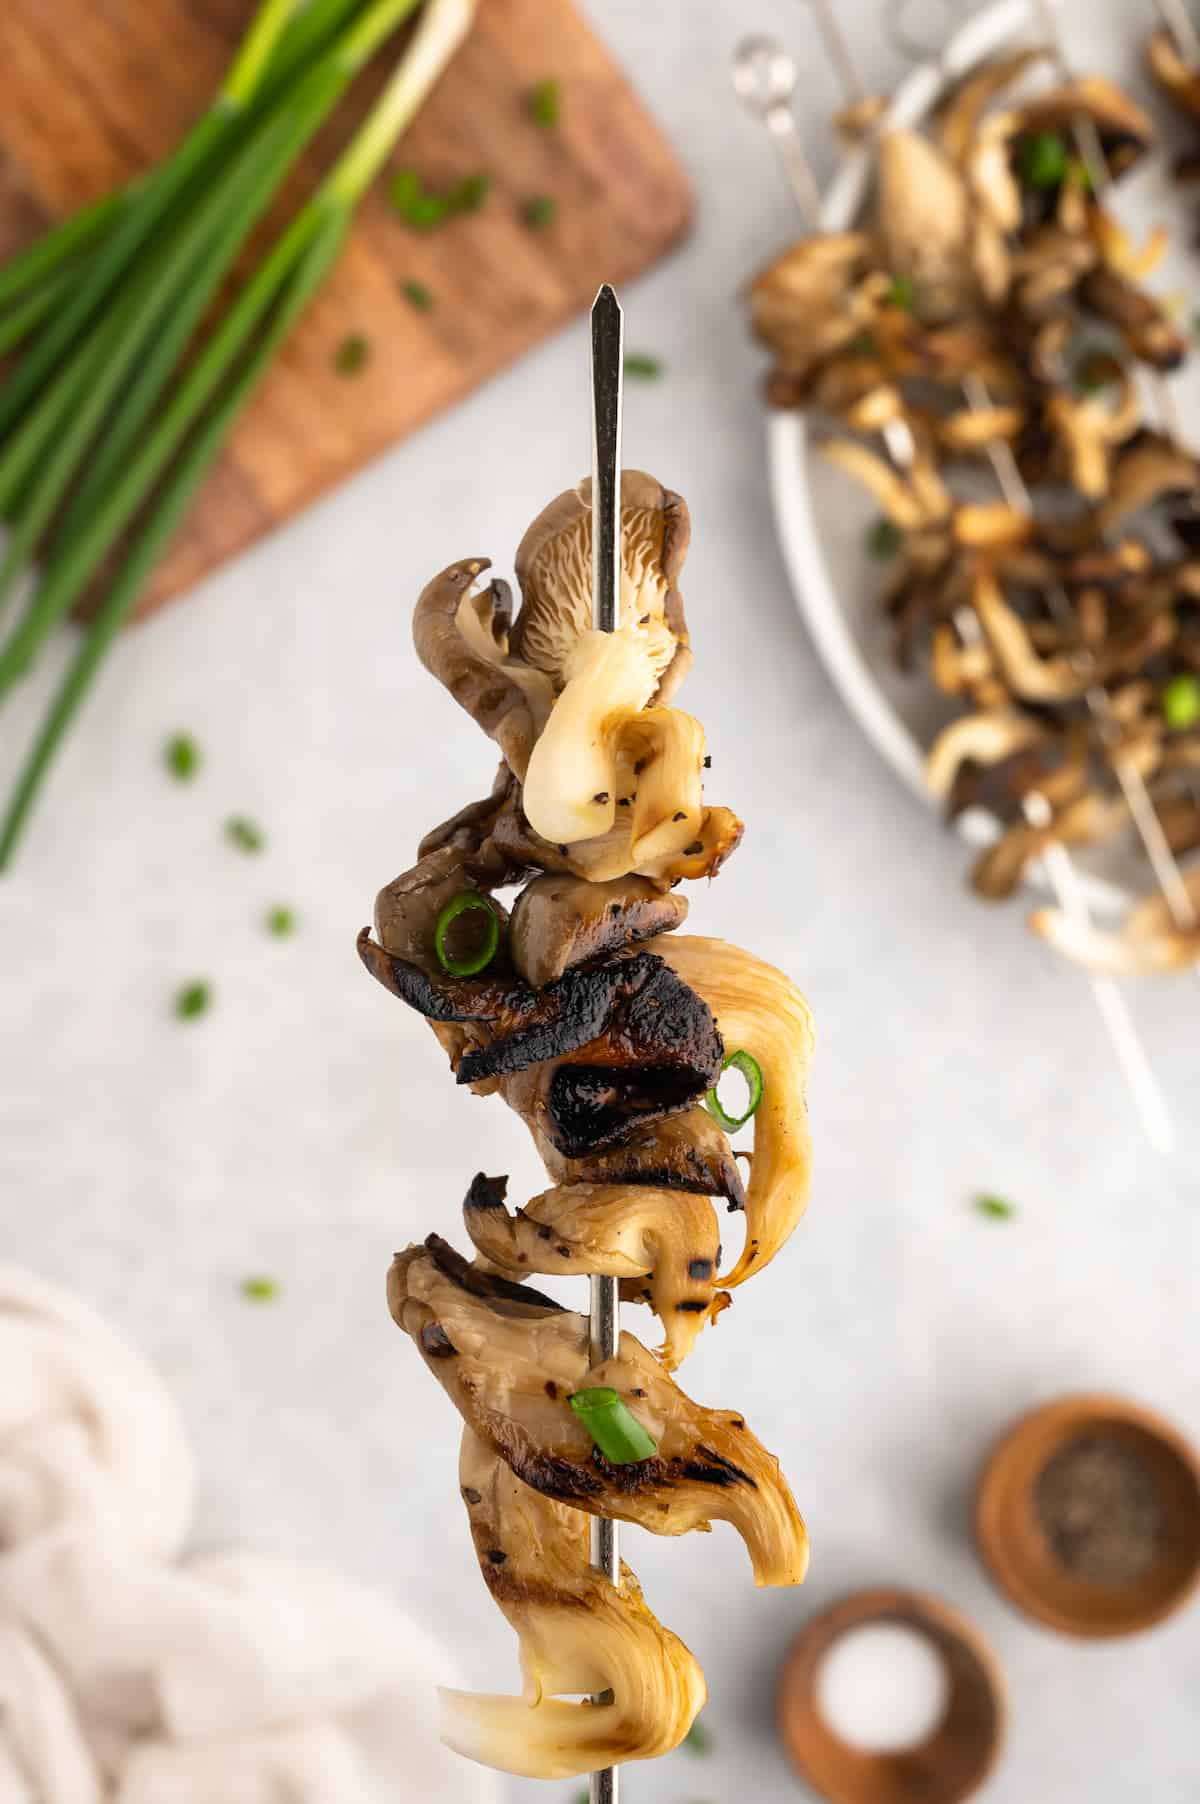 A close-up shot of grilled mushroom skewers.